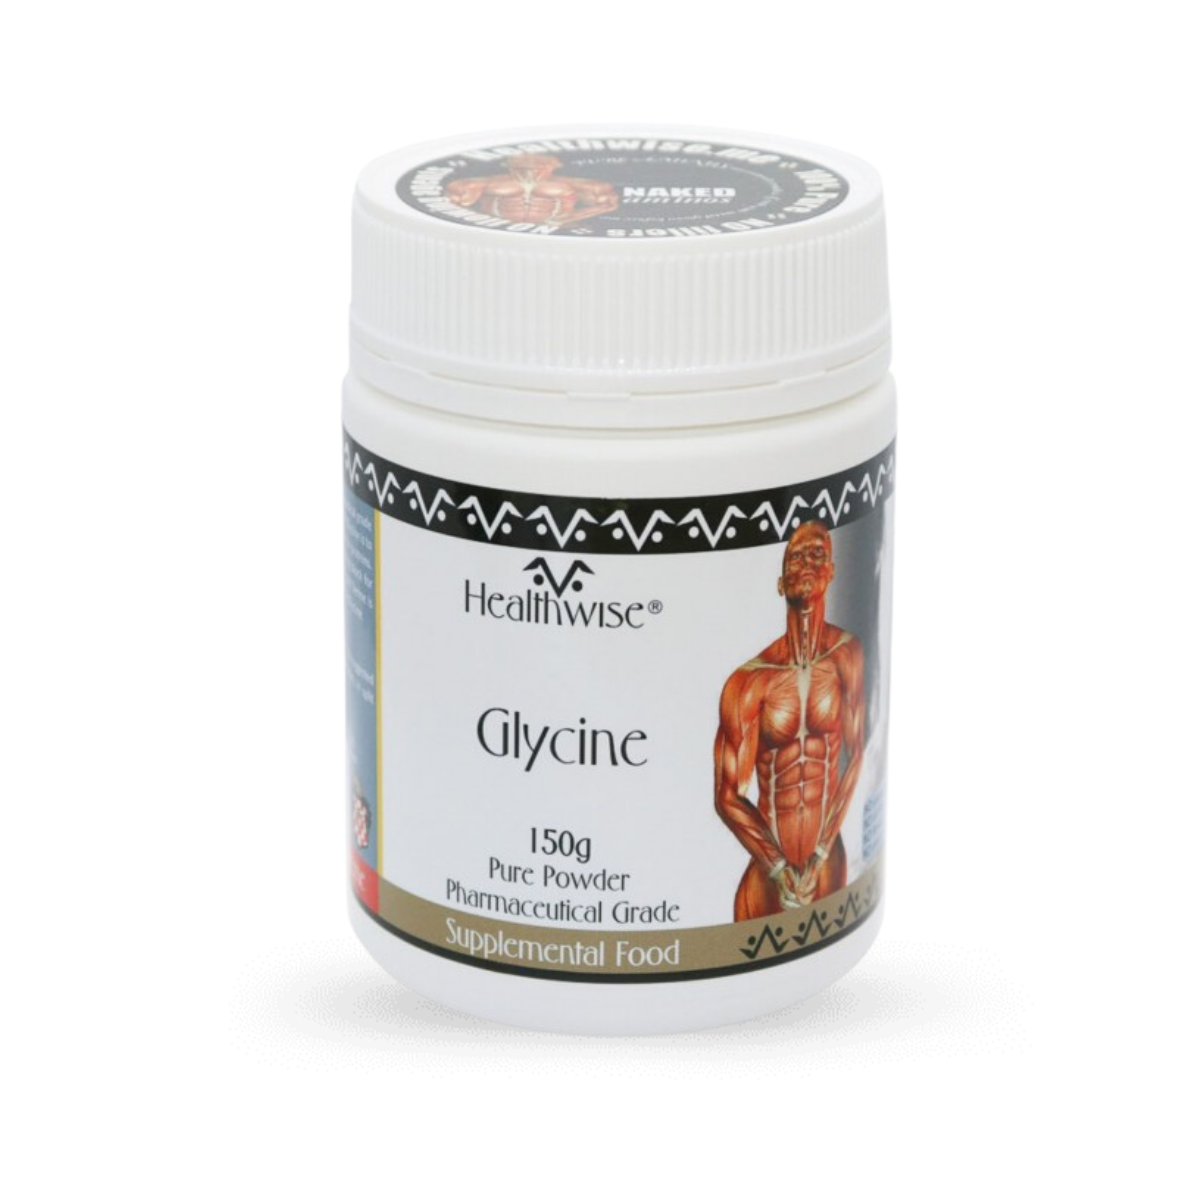 Healthwise Glycine Powder 150g